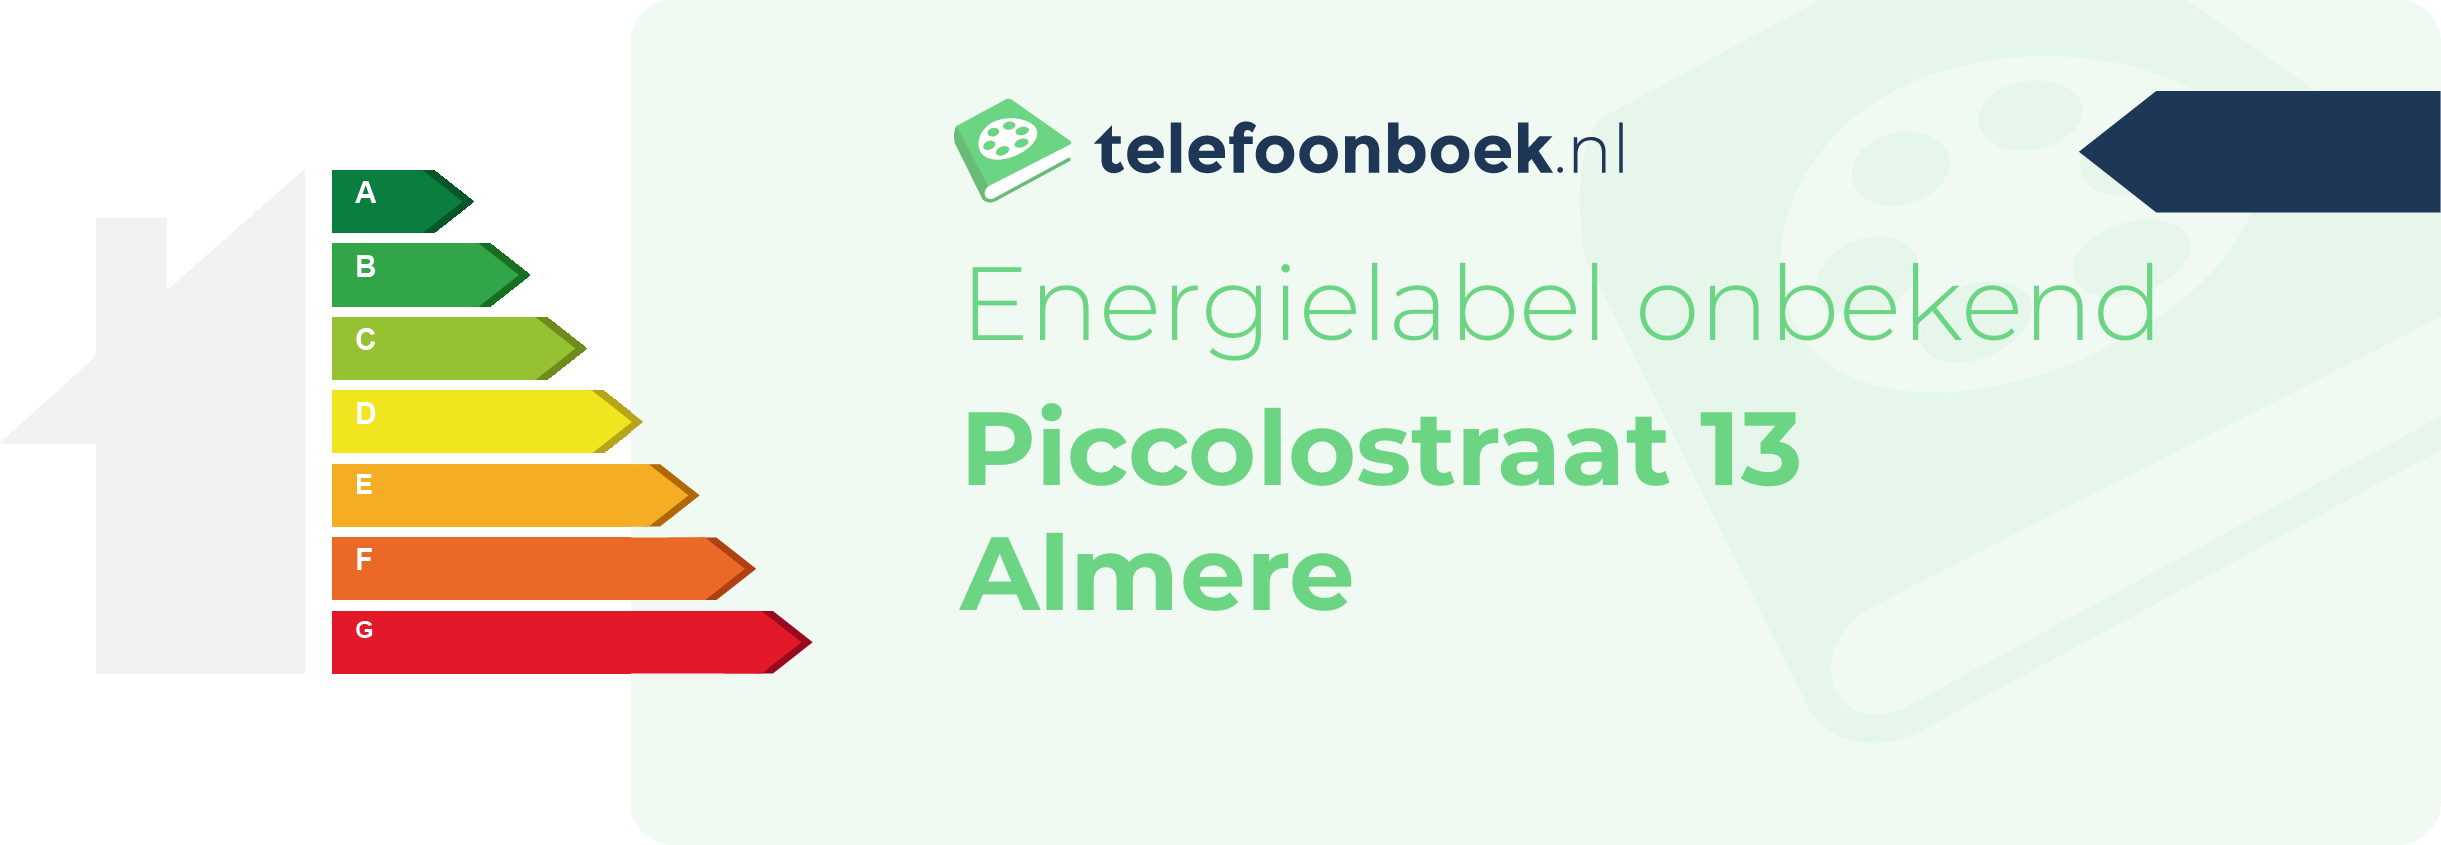 Energielabel Piccolostraat 13 Almere